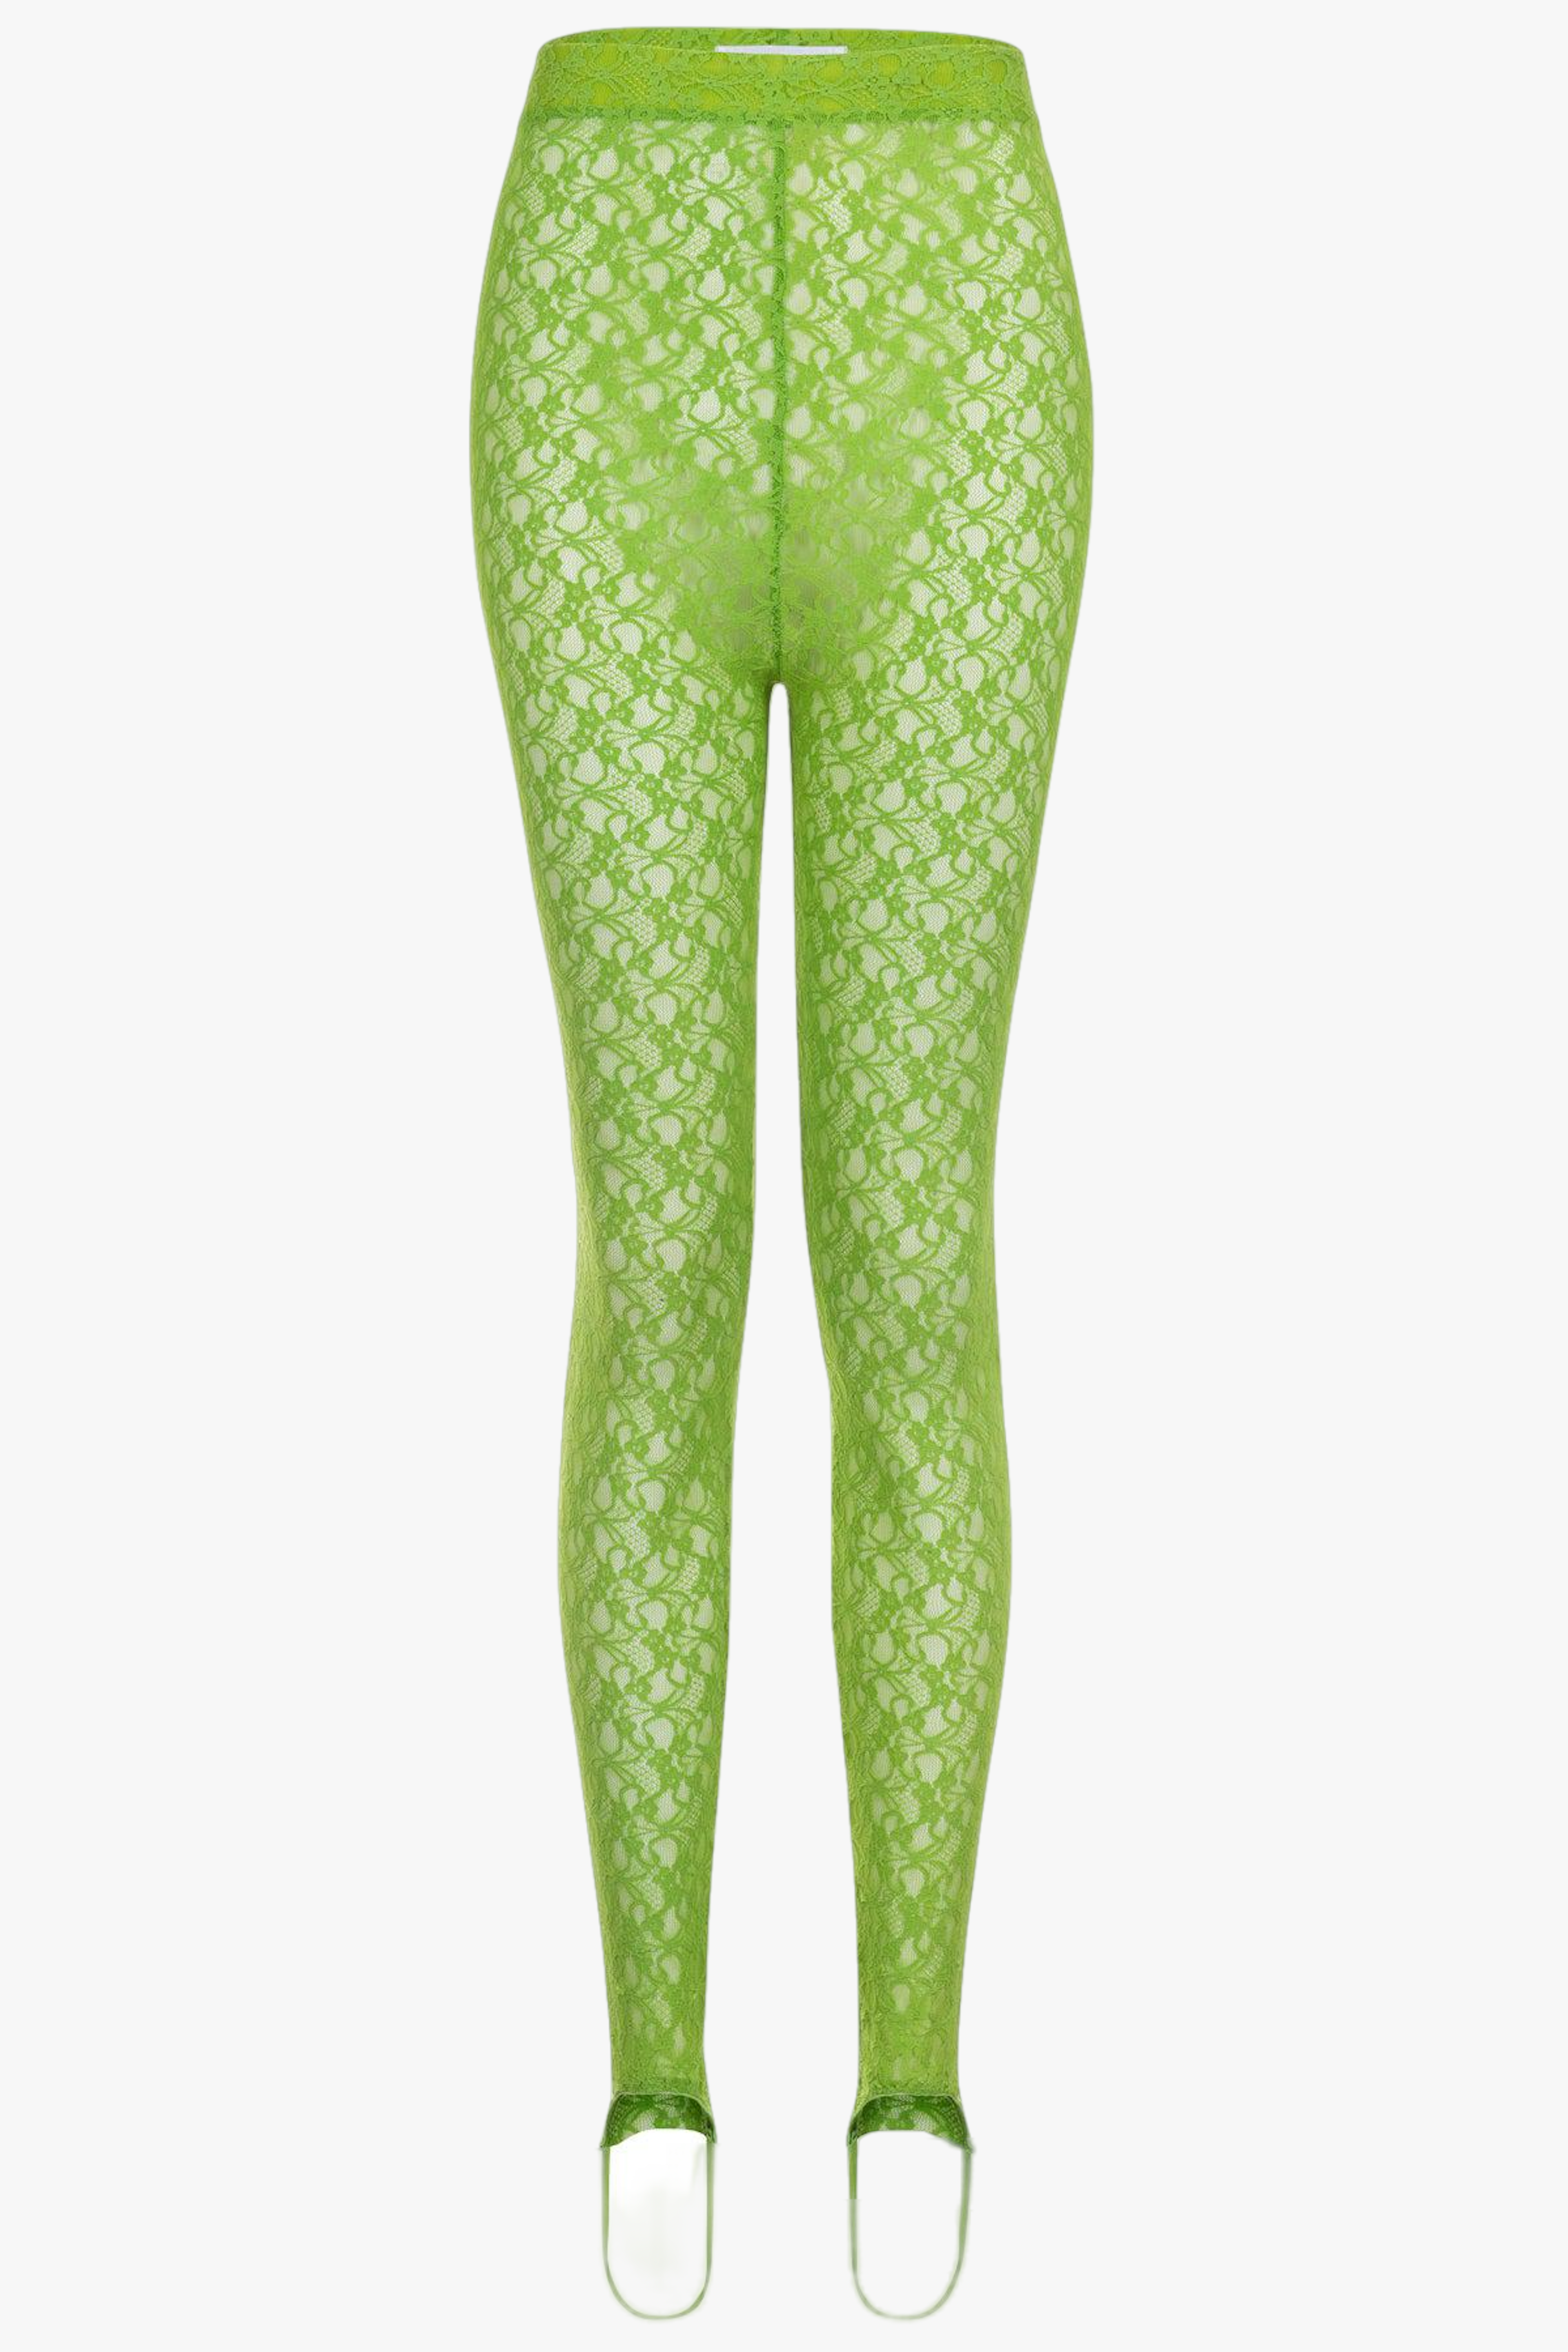 Sadie Lime Green Lace Stirrup Leggings- Made to Order – Natalie